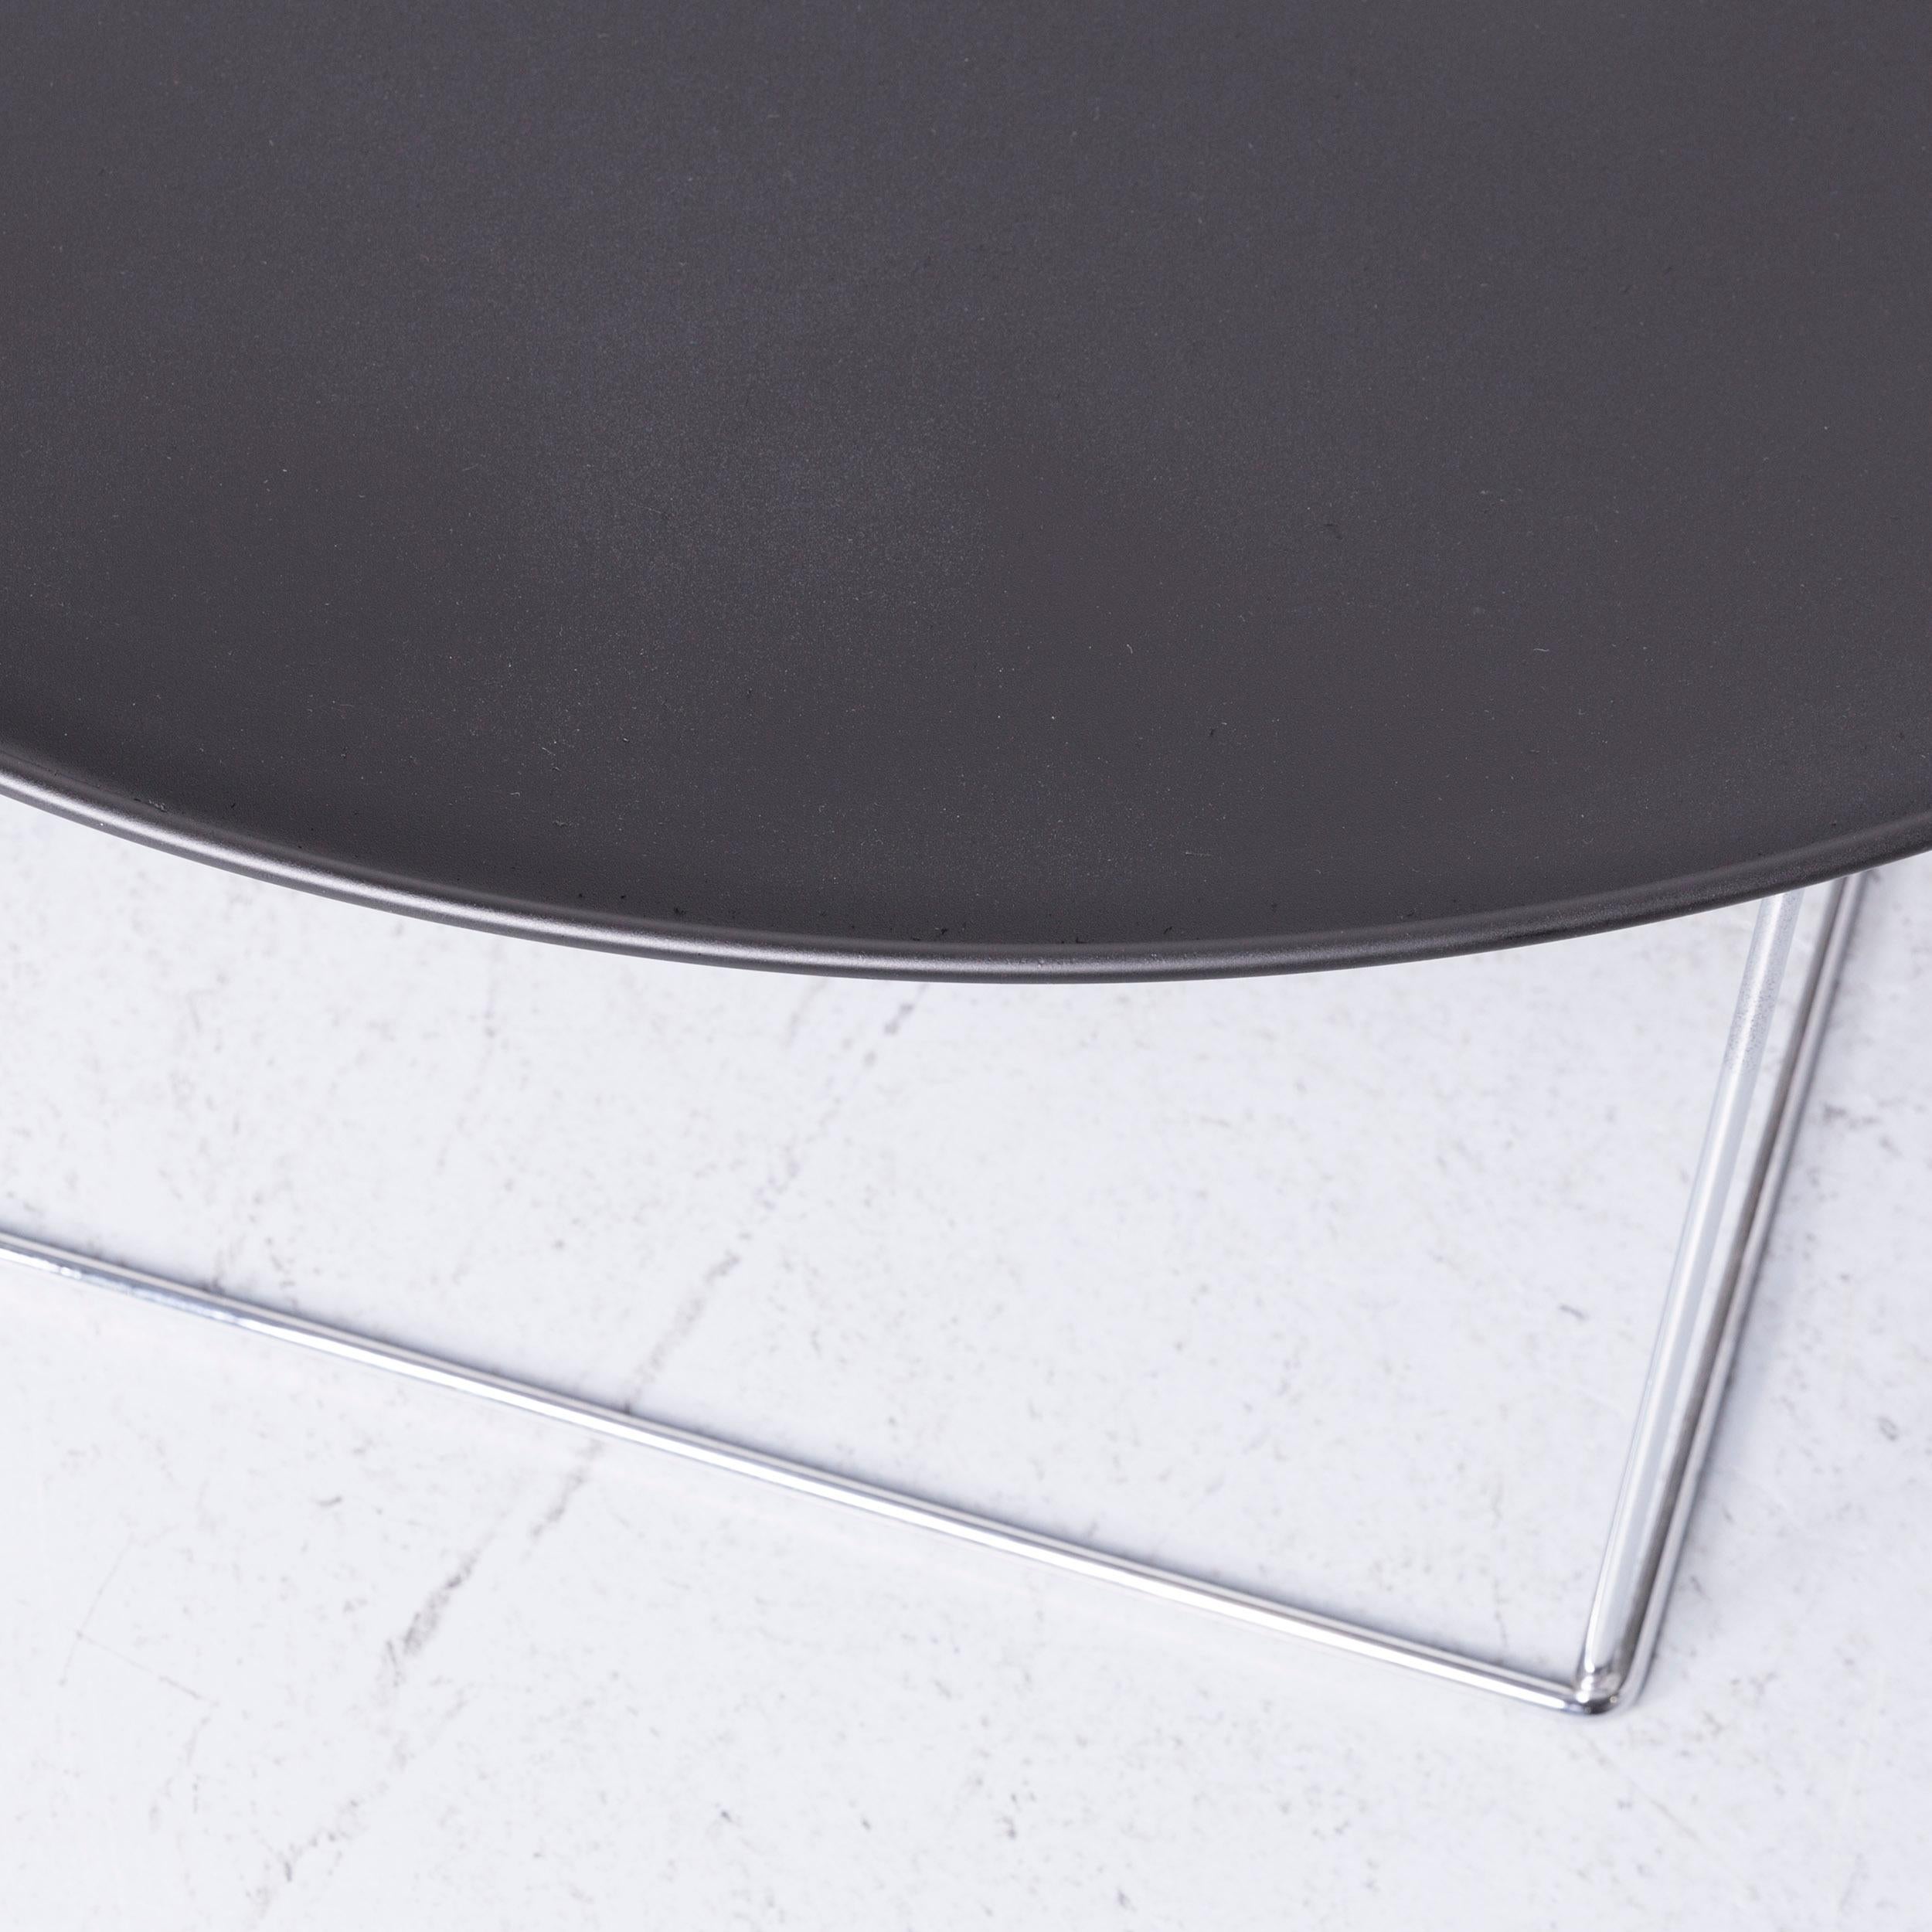 German B&B Italia Fat-Fat Designer Table Black Metal Coffee Table